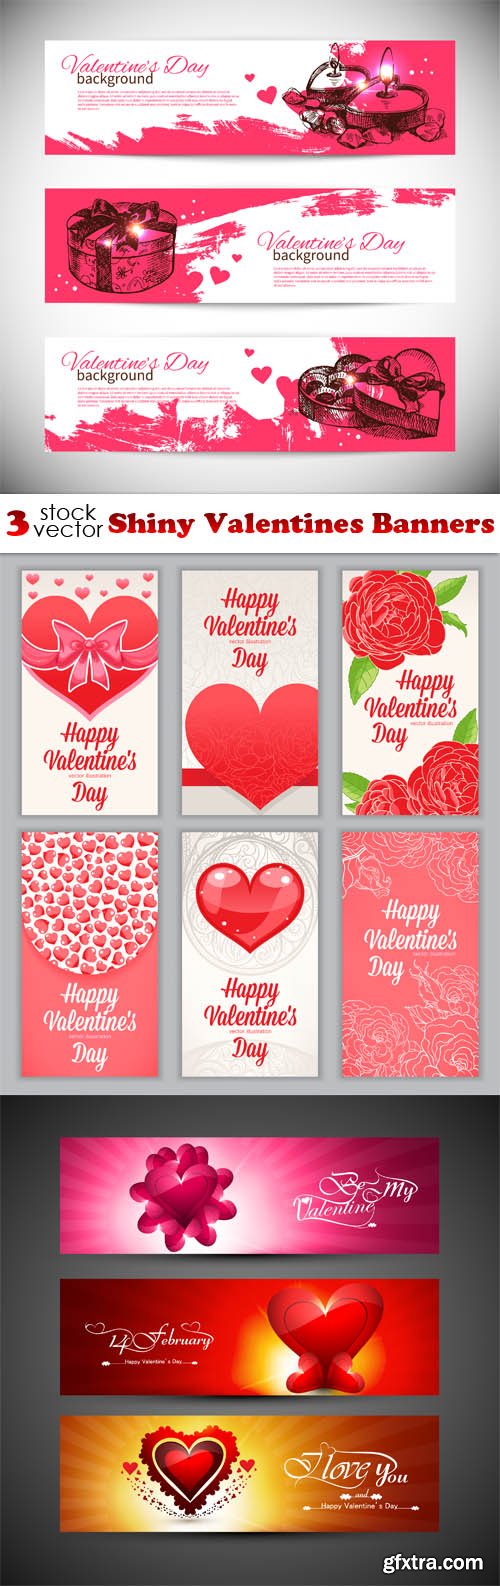 Vectors - Shiny Valentines Banners